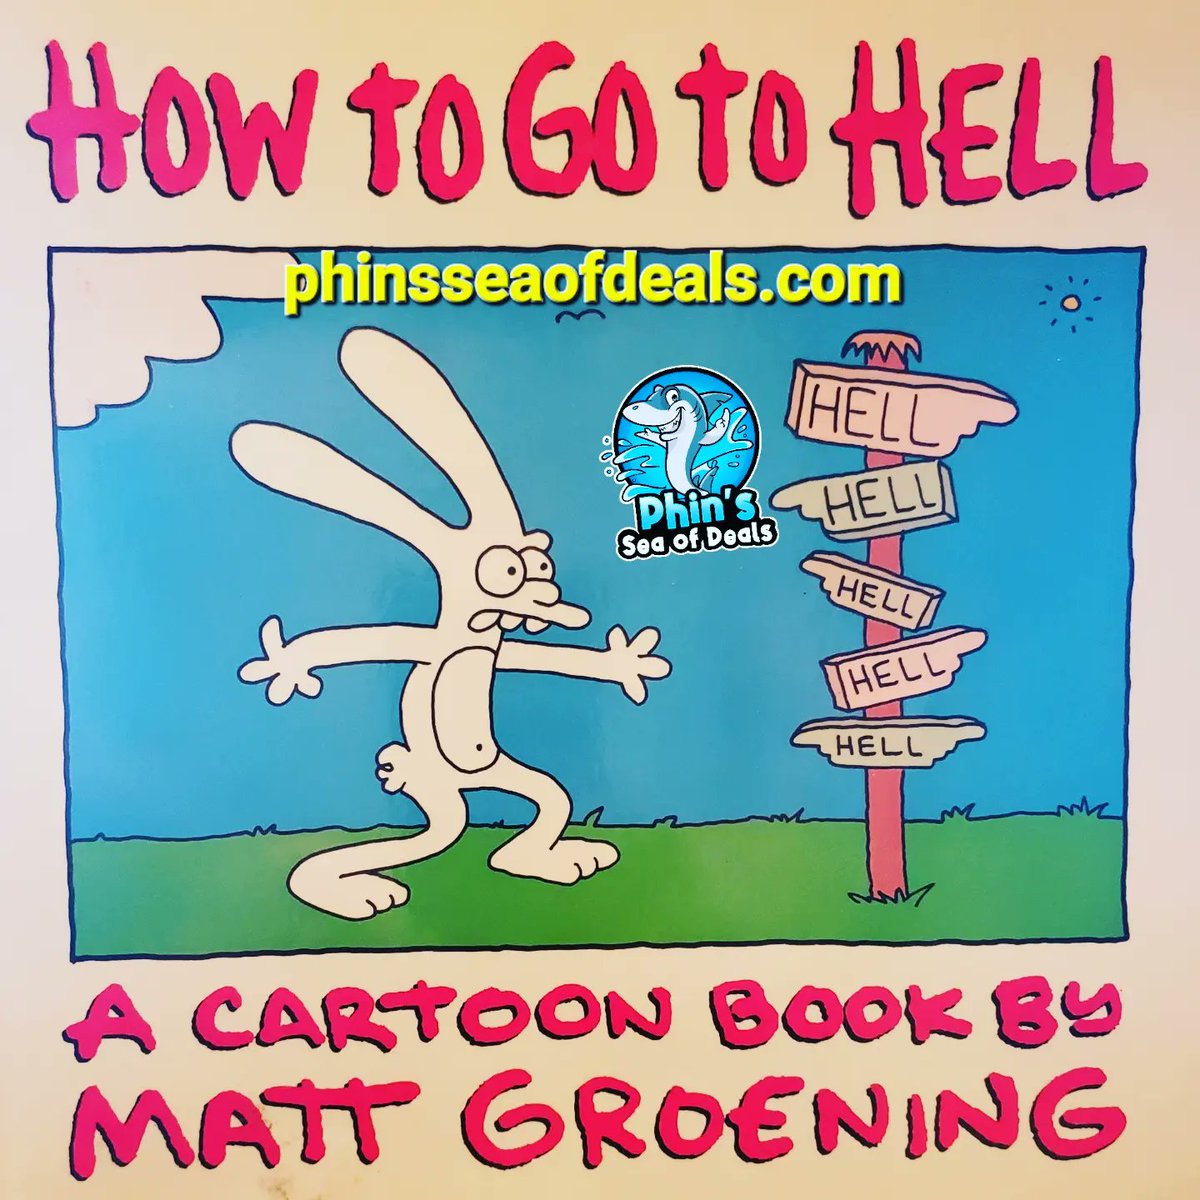 How to go to Hell, A cartoon book by Matt Groening 

Phinsseaofdeals.com 

#Phinsseaofdeals #thesimpsons #Simpsons #90s #90scartoons #simpsonsfan #simpsonscollection #simpsonstoys #homer #margesimpson  #smallbusiness #pittsburghsmallbusiness #mattgroening